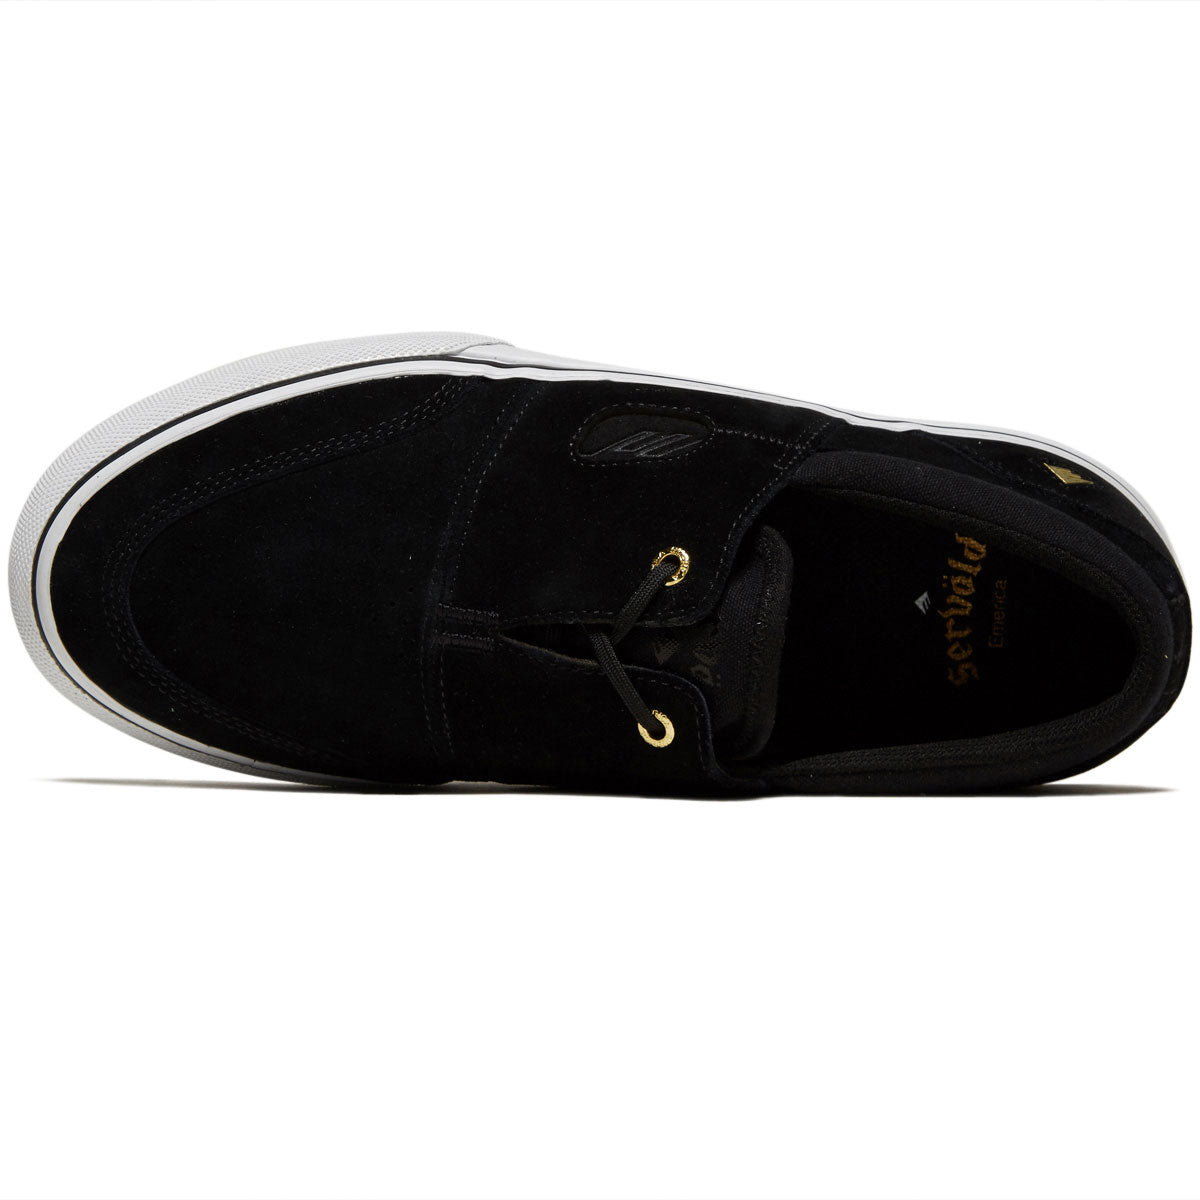 Emerica Servold Shoes - Black/White/Gold image 3